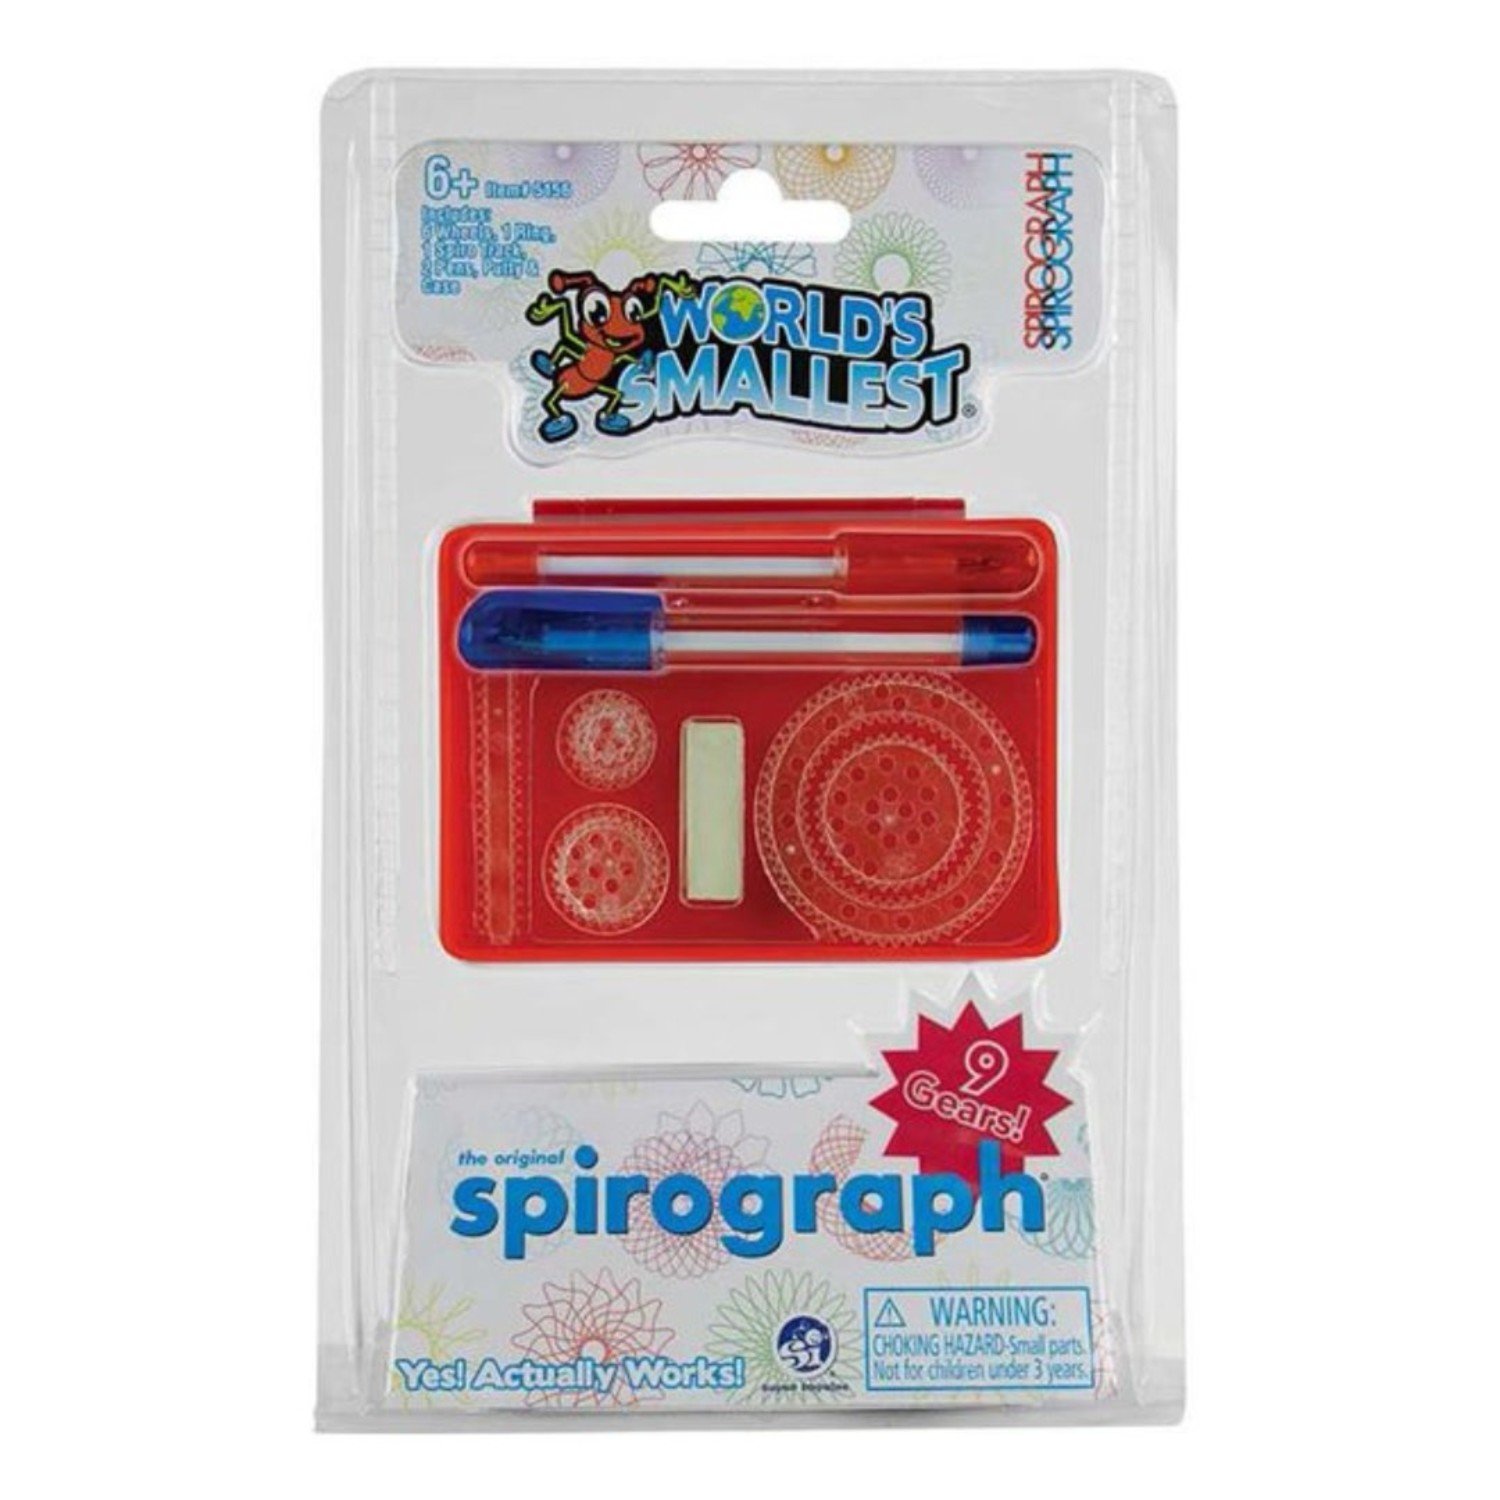 Spirograph-Inspired Maker Blasts Kickstarter Goals By 224%, Then 544%